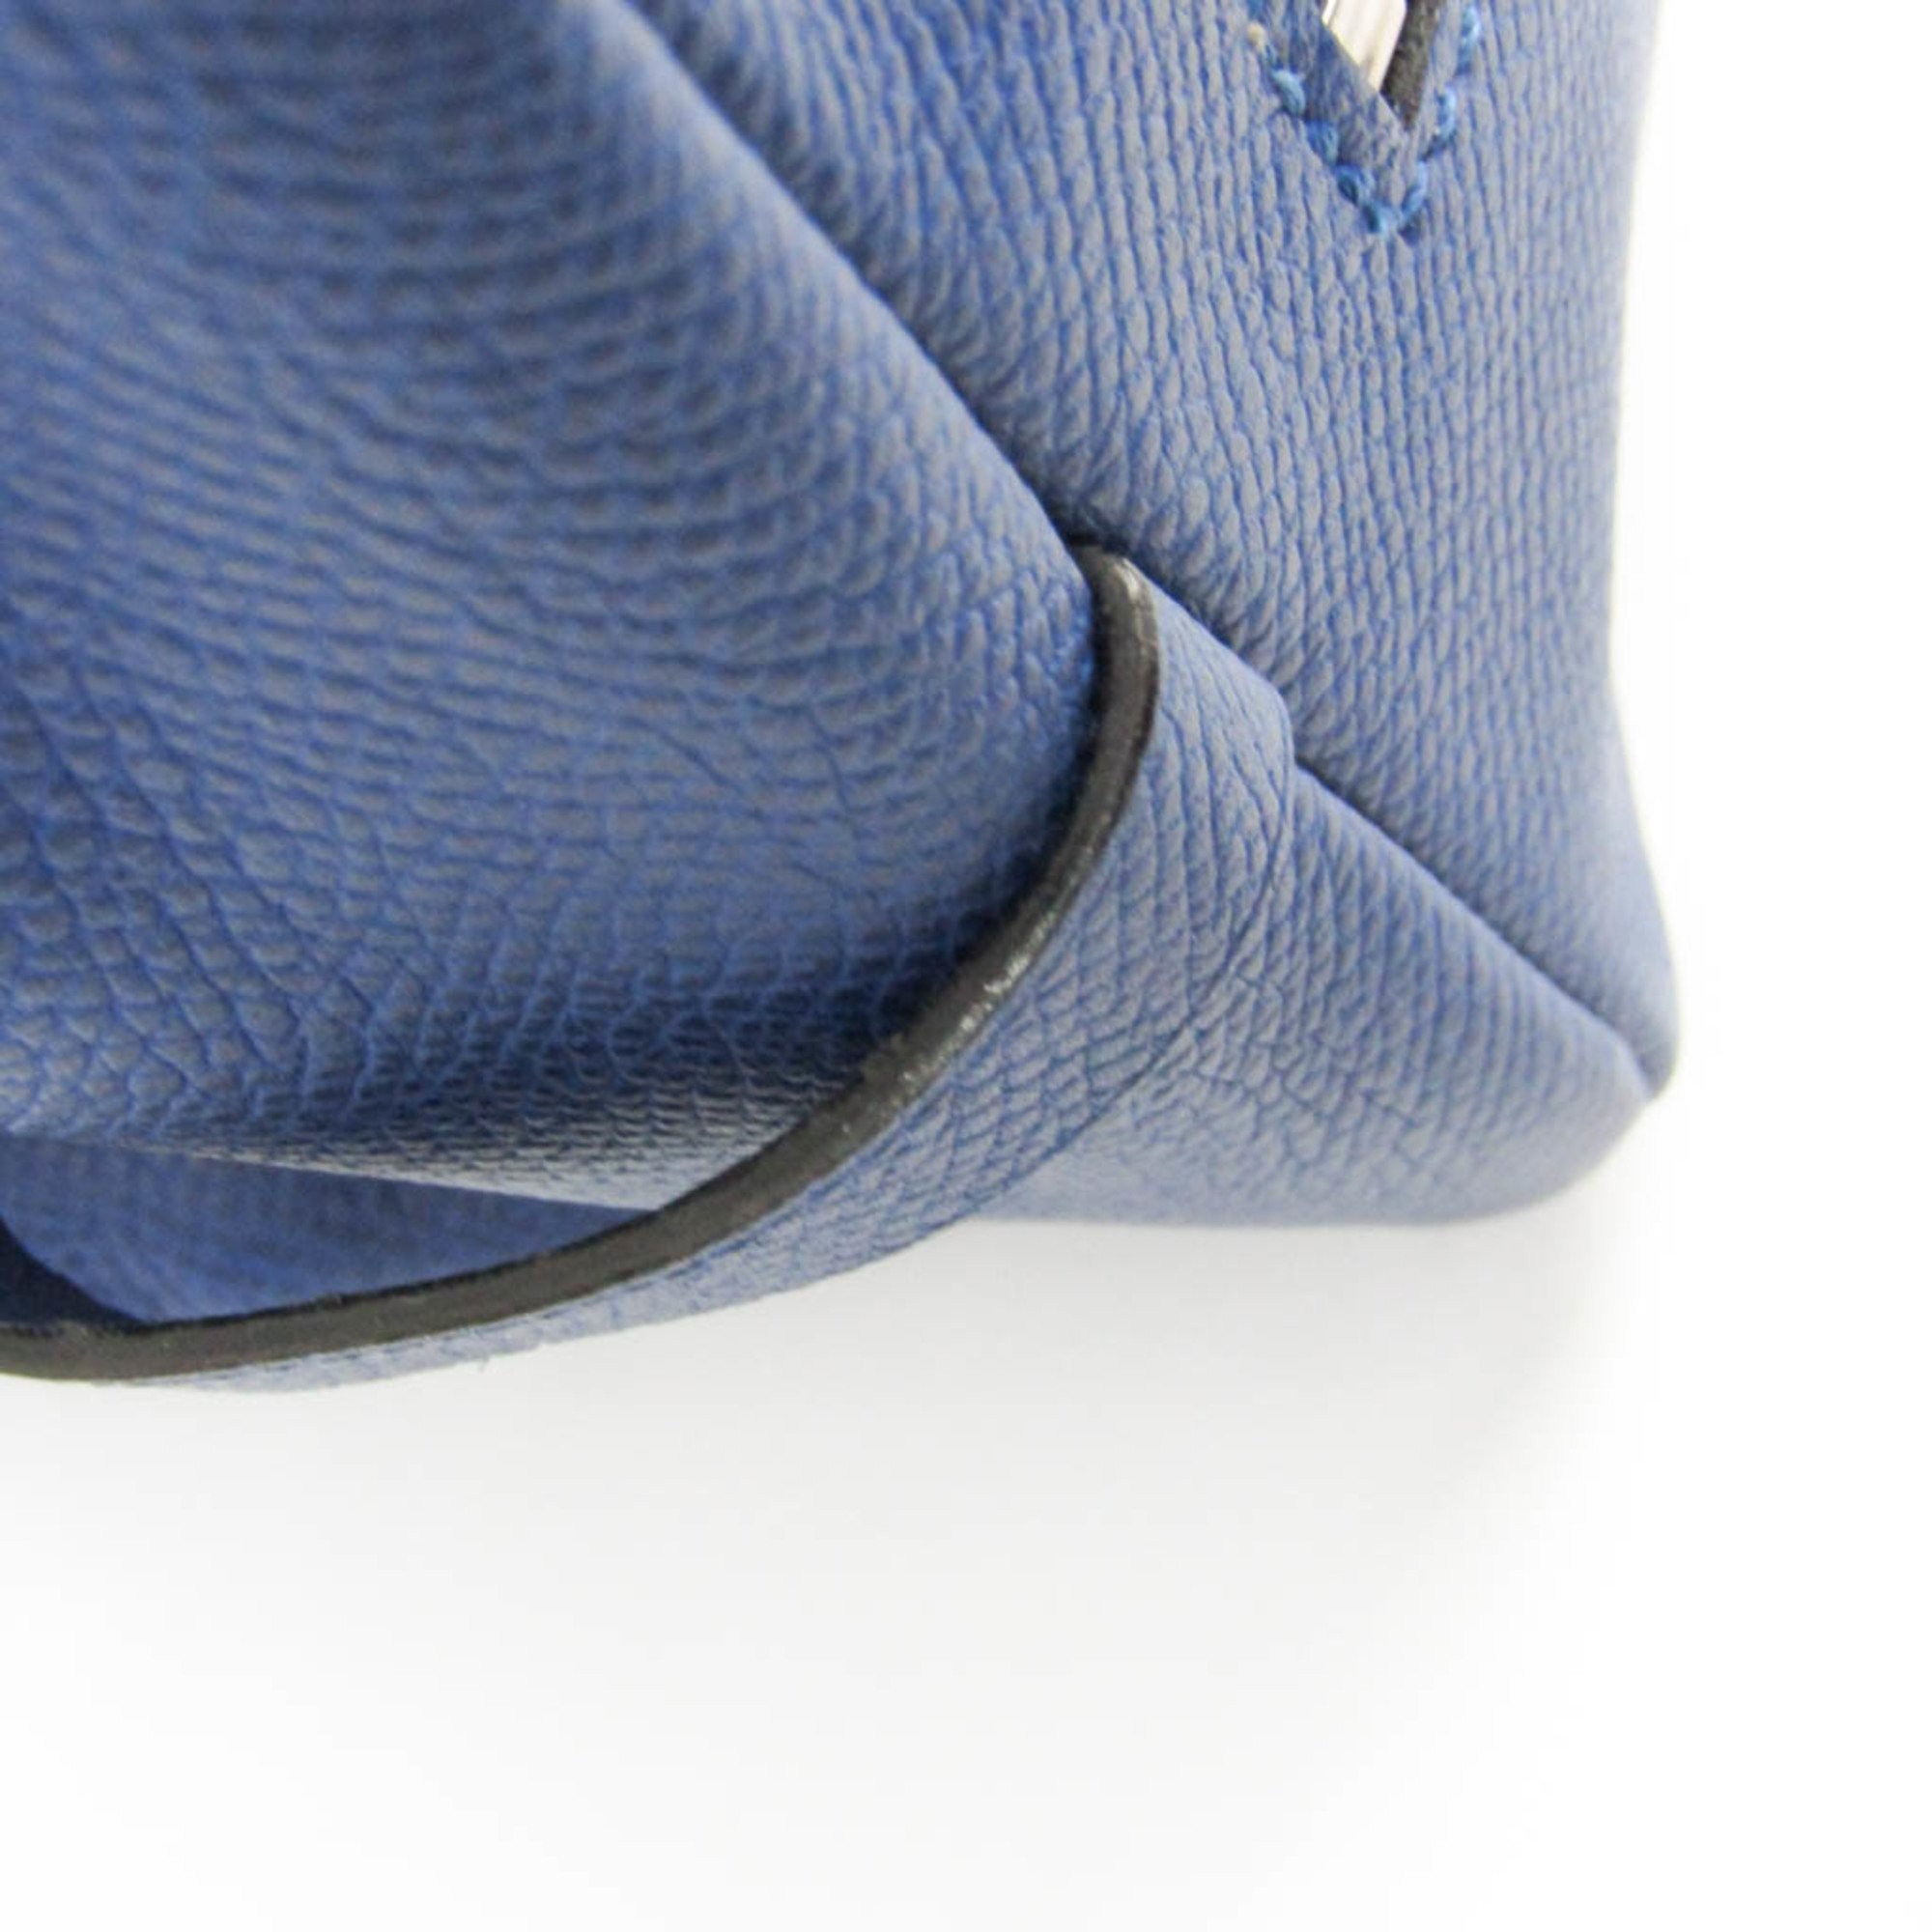 Valextra Large Beauty Case V6A68 Unisex Leather Clutch Bag,Pouch Royal Blue